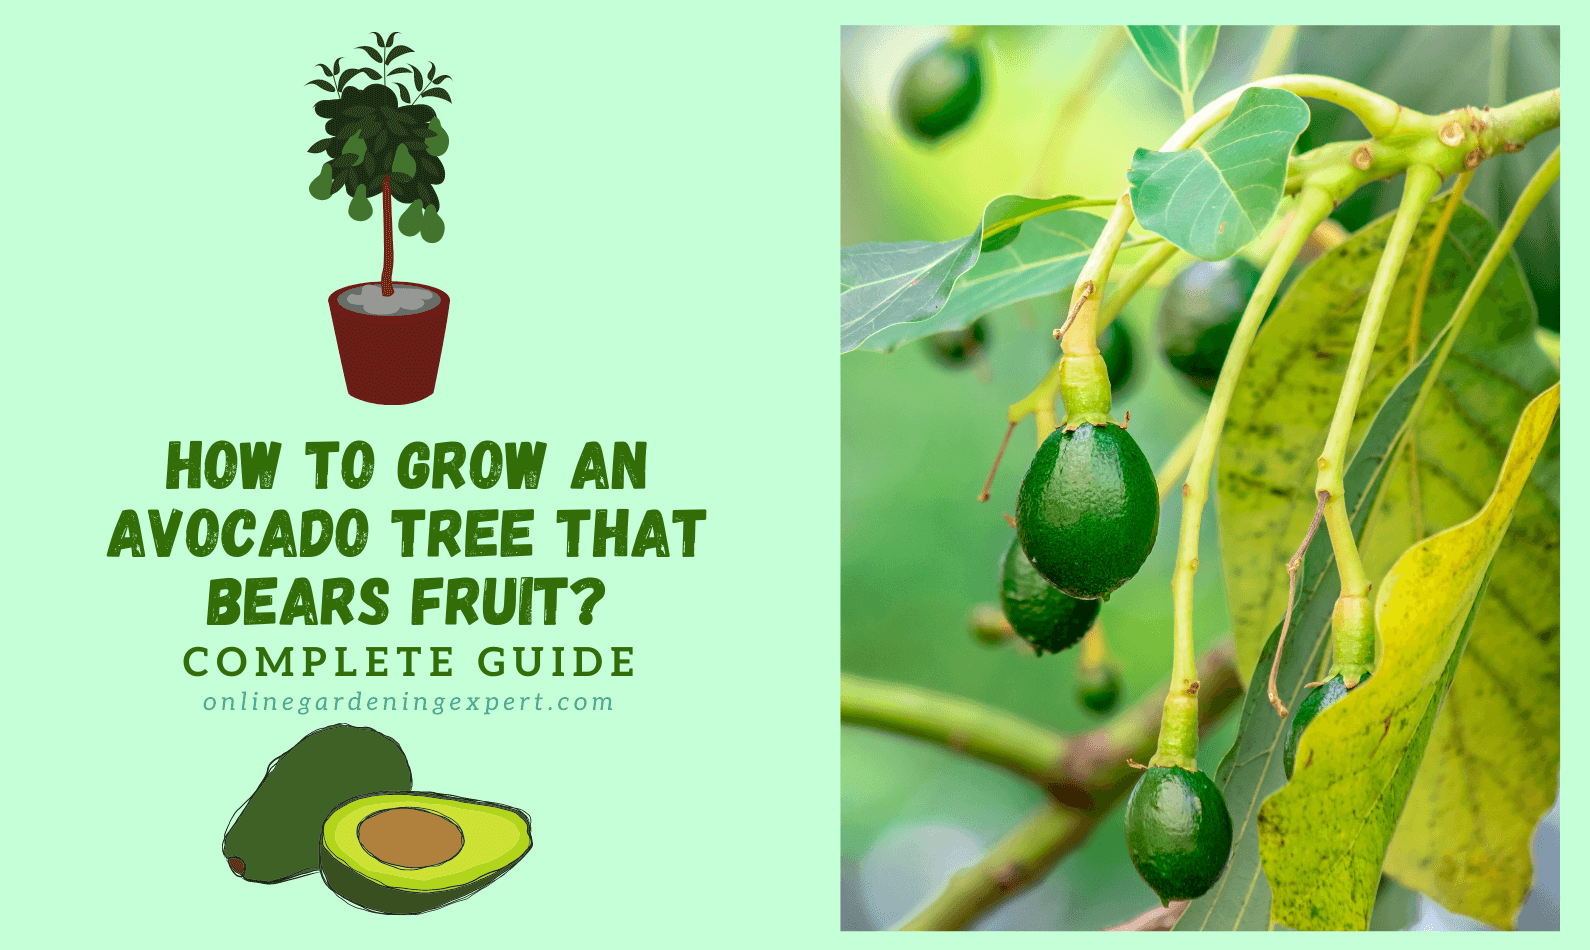 How to Grow an Avocado Tree that Bears Fruit